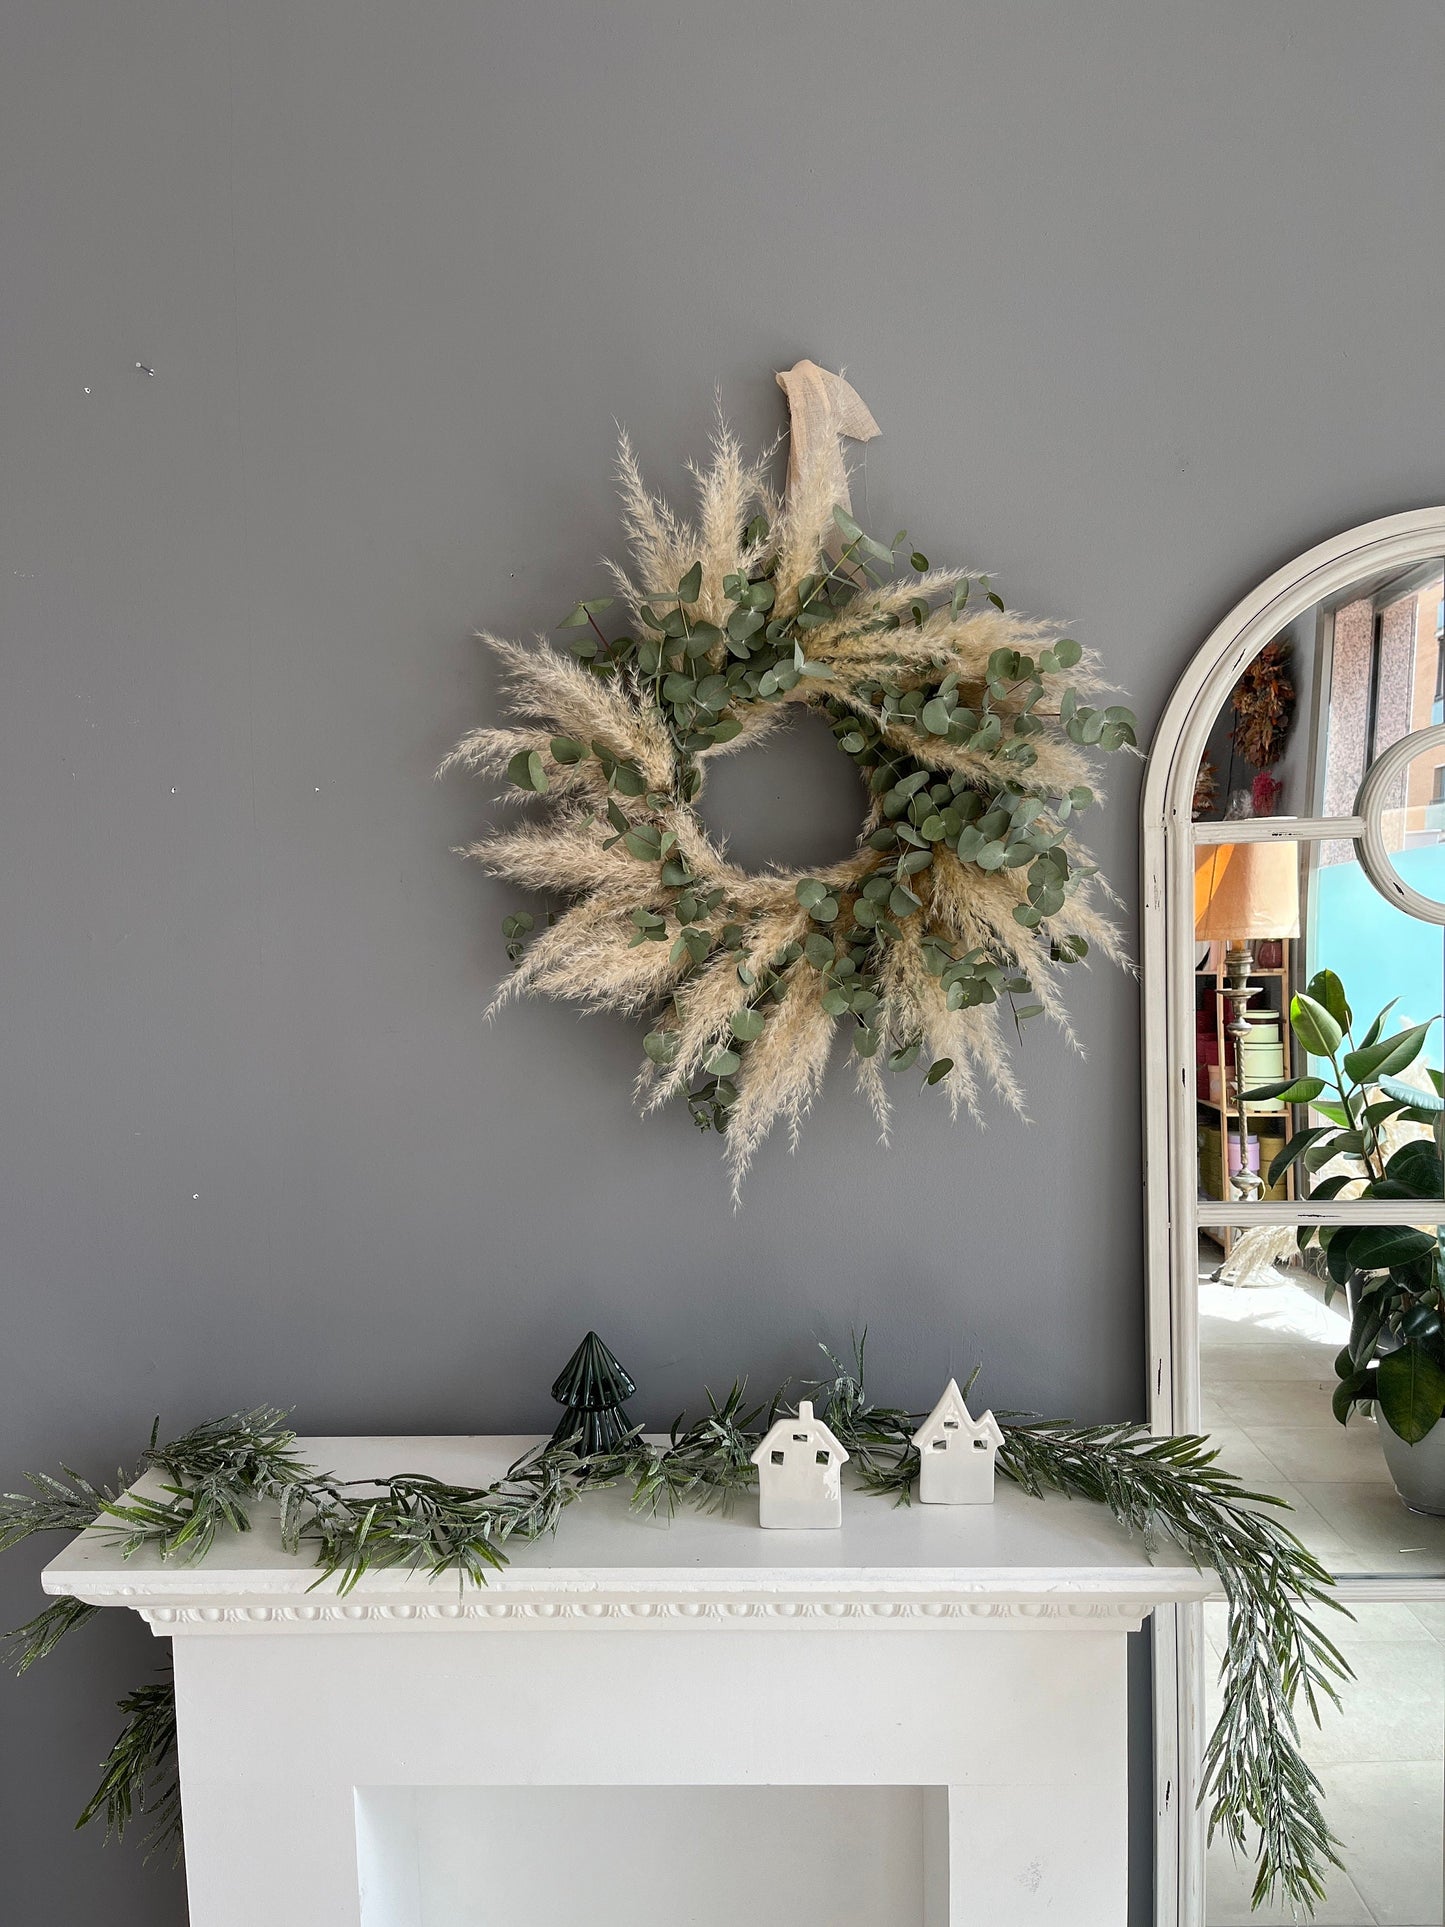 Boho Wall Decor, Eucalyptus Wreath, Pampas Wreath, Rustic Decor, Rustic Home Decor, Dried flowers wreath, Year round Wreath, Housewarming